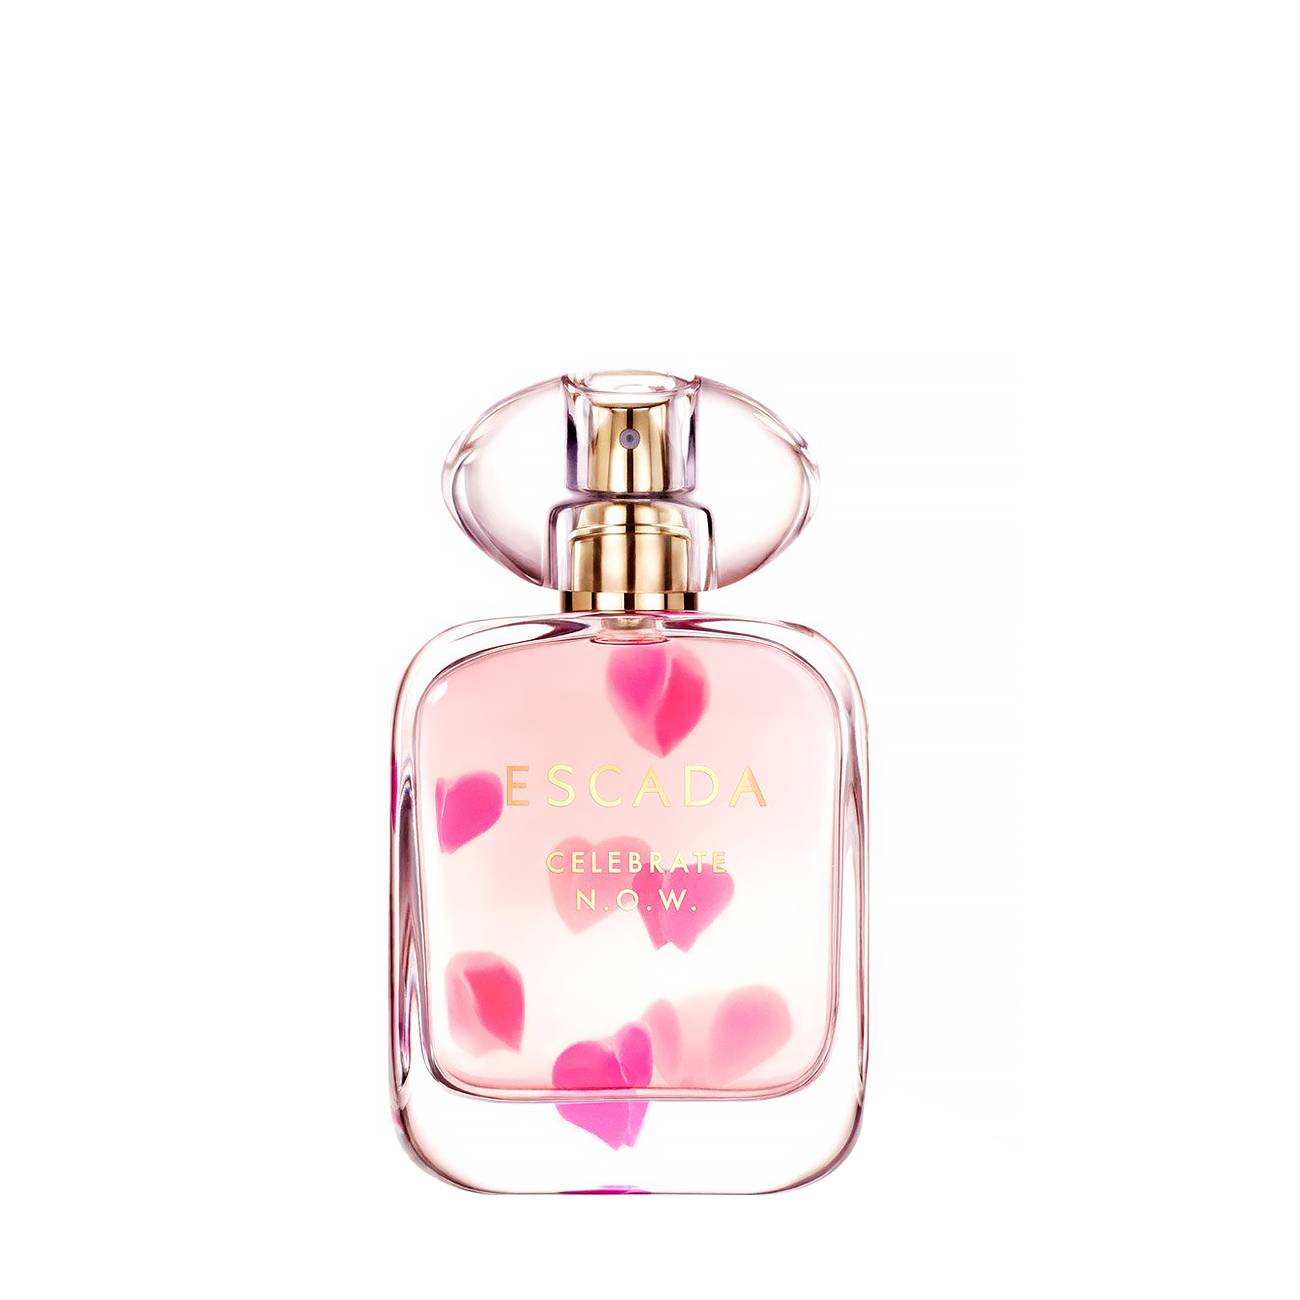 Apa de Parfum Escada CELEBRATE NOW 30ml cu comanda online